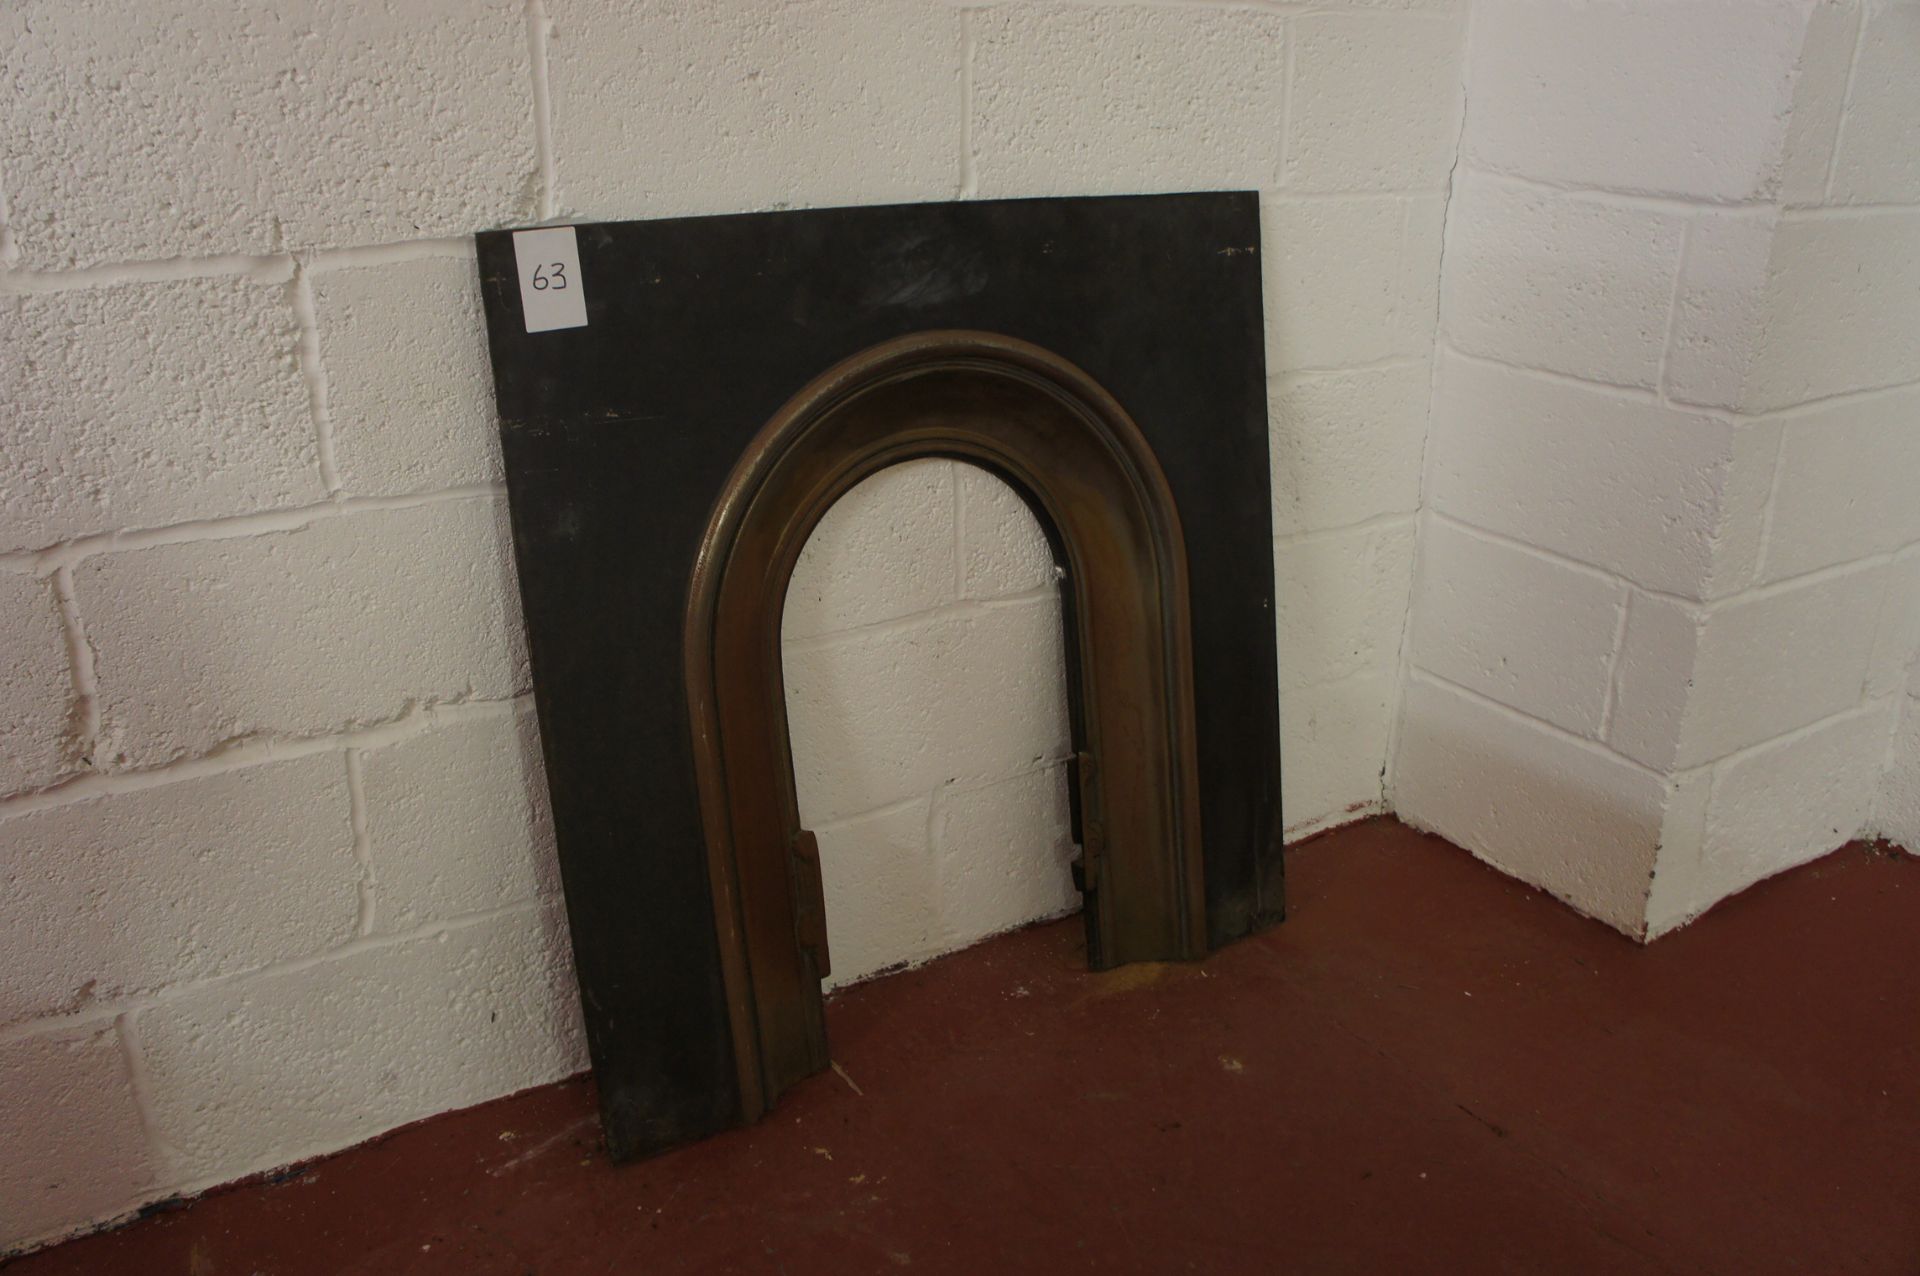 Gallery Coronet cast iron fireplace insert - Image 2 of 3